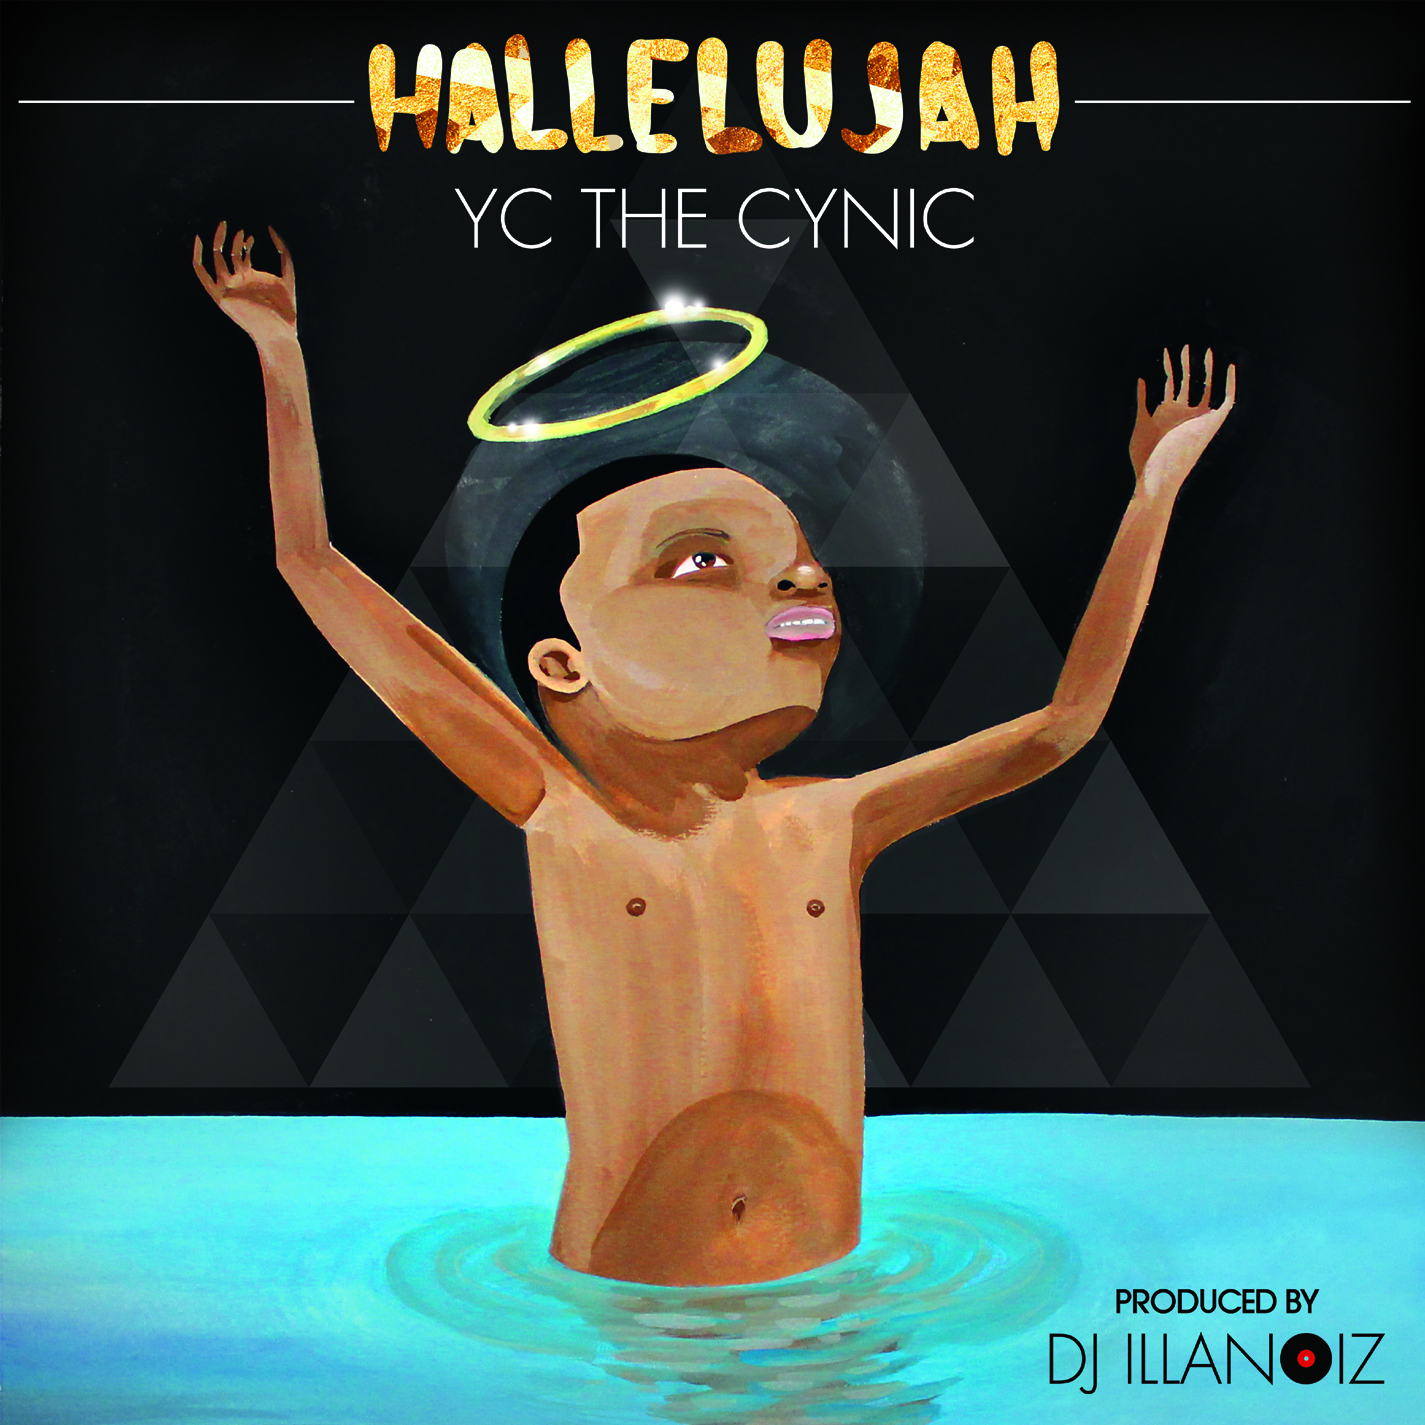 YC The Cynic “Hallelujah” (Prod. by DJ Illanoiz) [DOPE!]